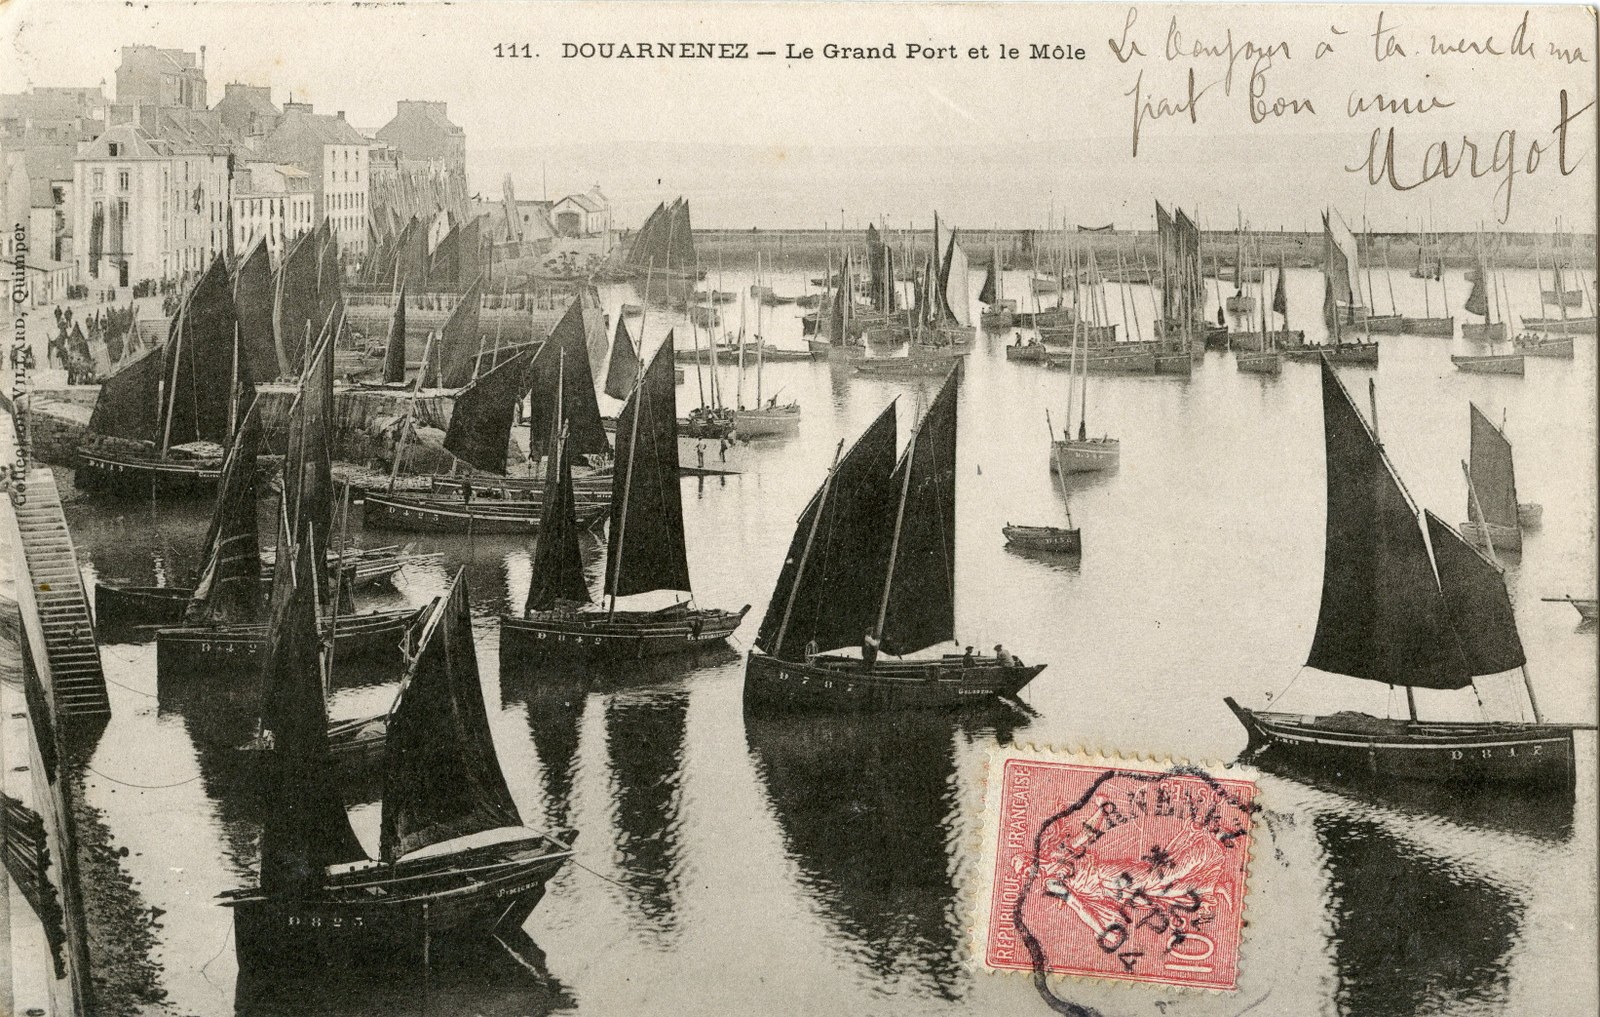 Source : Carte postale n° 111, Collection Villard, Quimper.